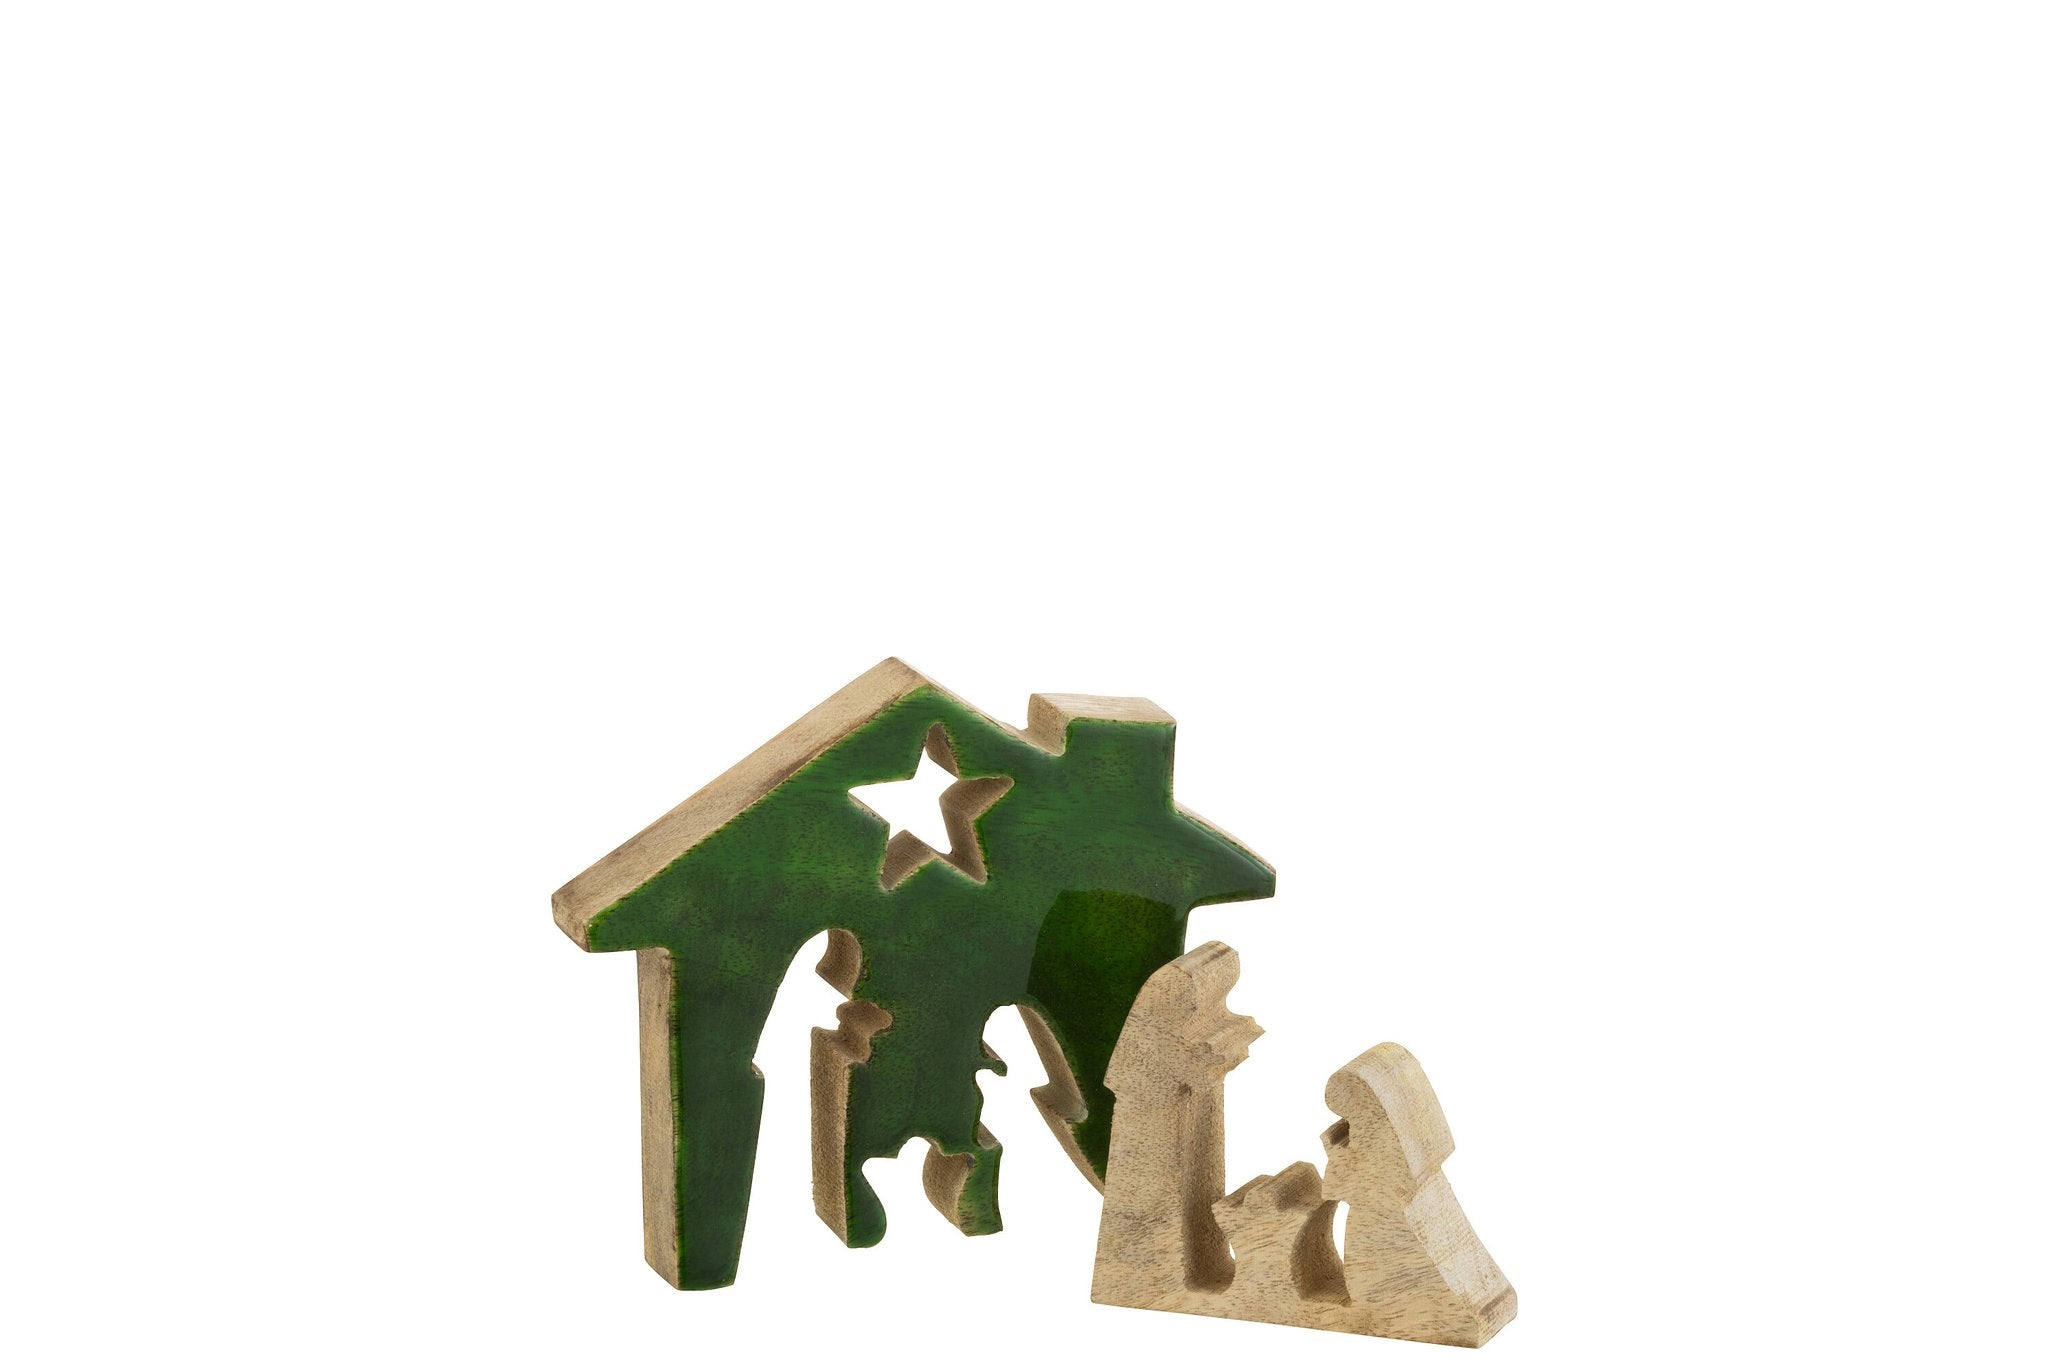 J-Line Kerstcadeau - Kribbe in huisvorm - hout, groen, naturel - formaat small - Kerstmis decoratie